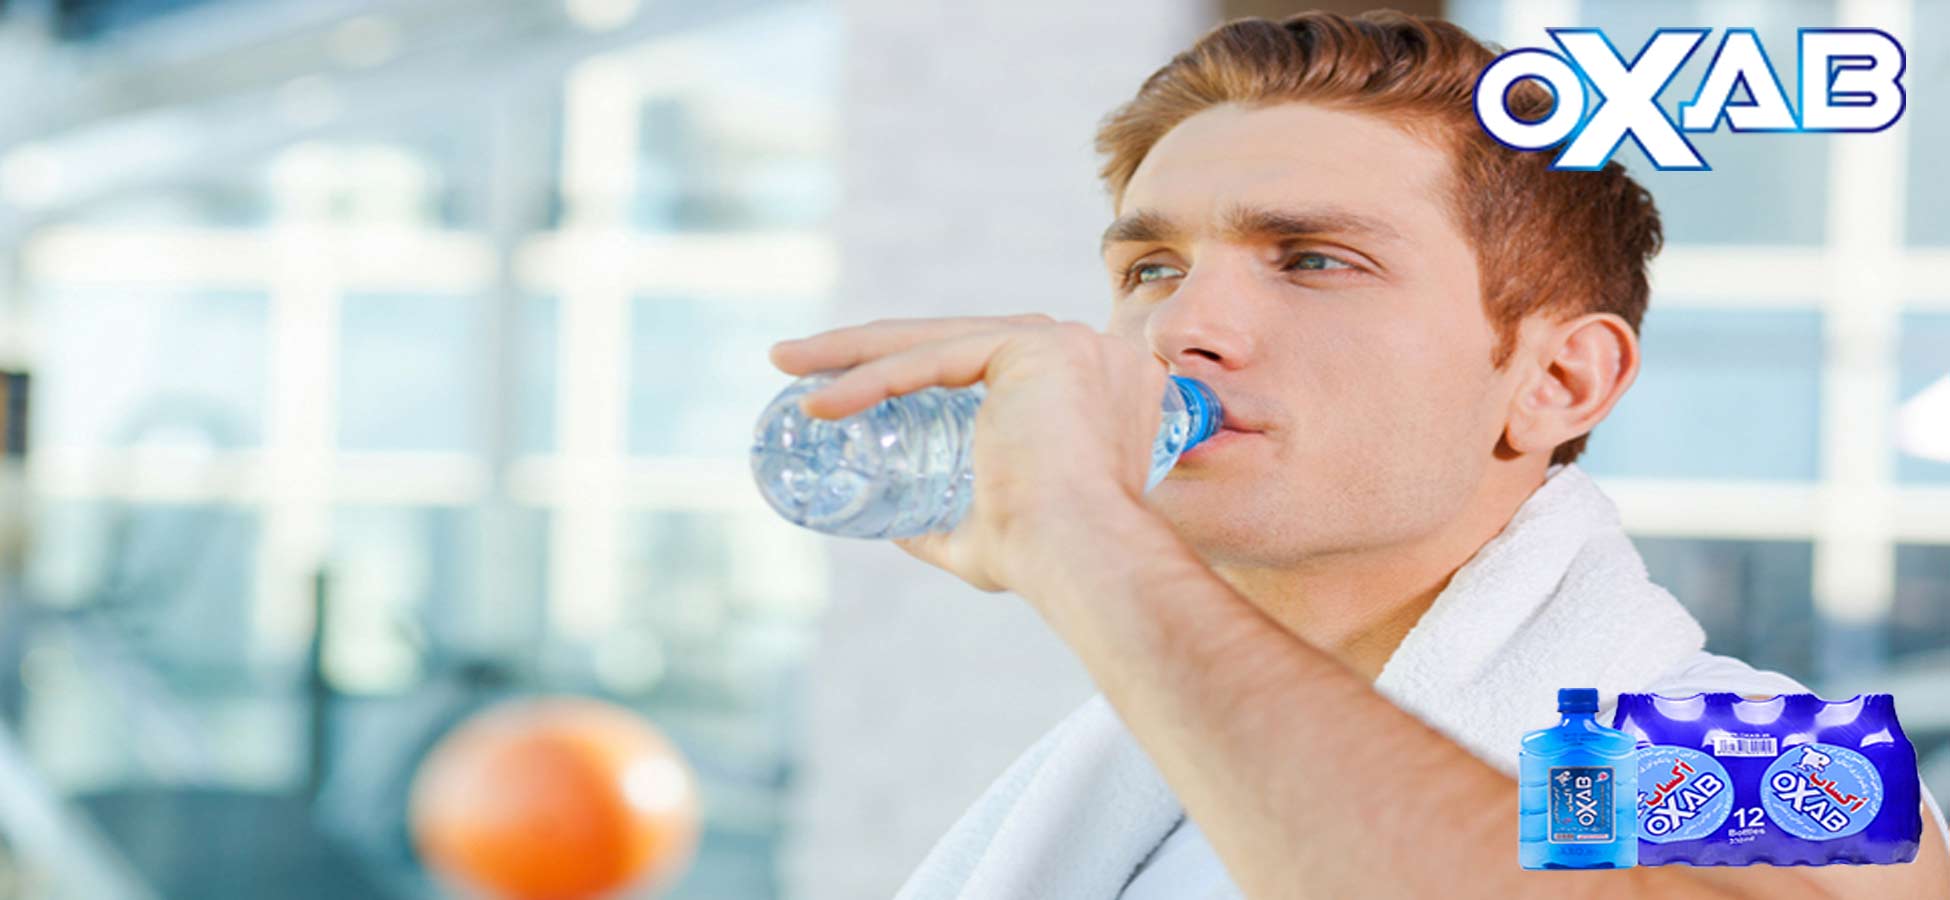 اهمیت نوشیدن آب آشامیدنی